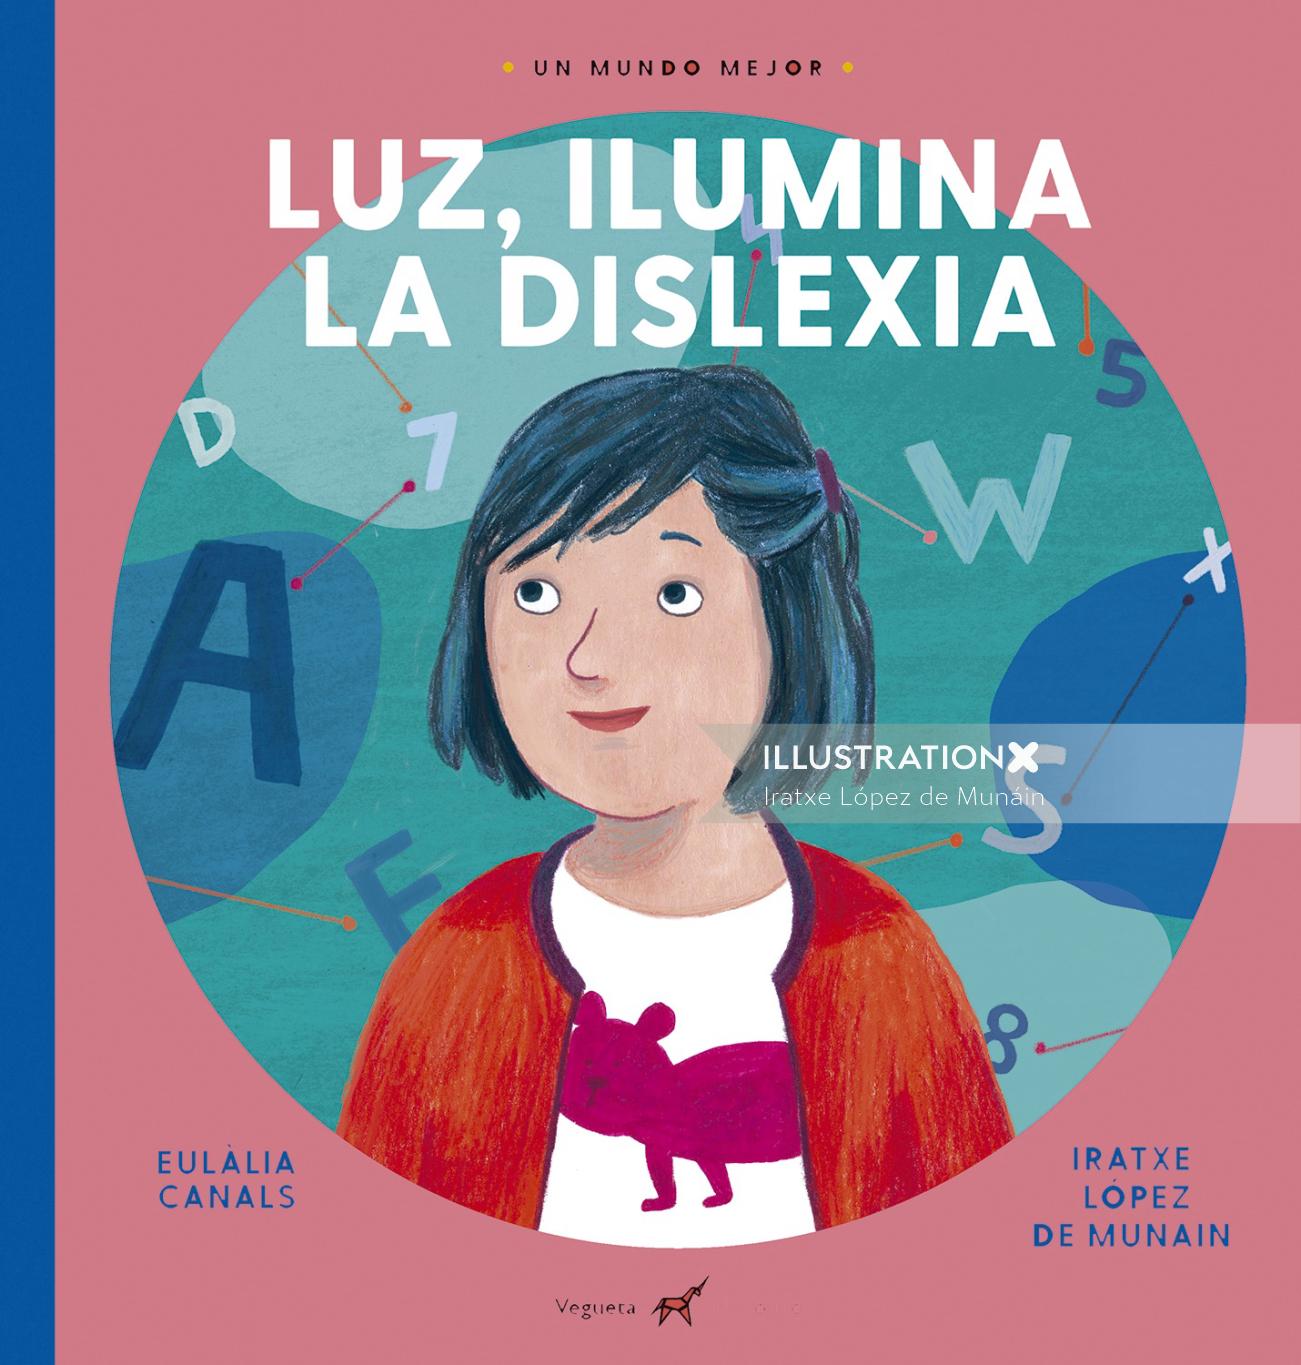 IratxeLópezdeMunáinによる子供向けの本の表紙デザイン